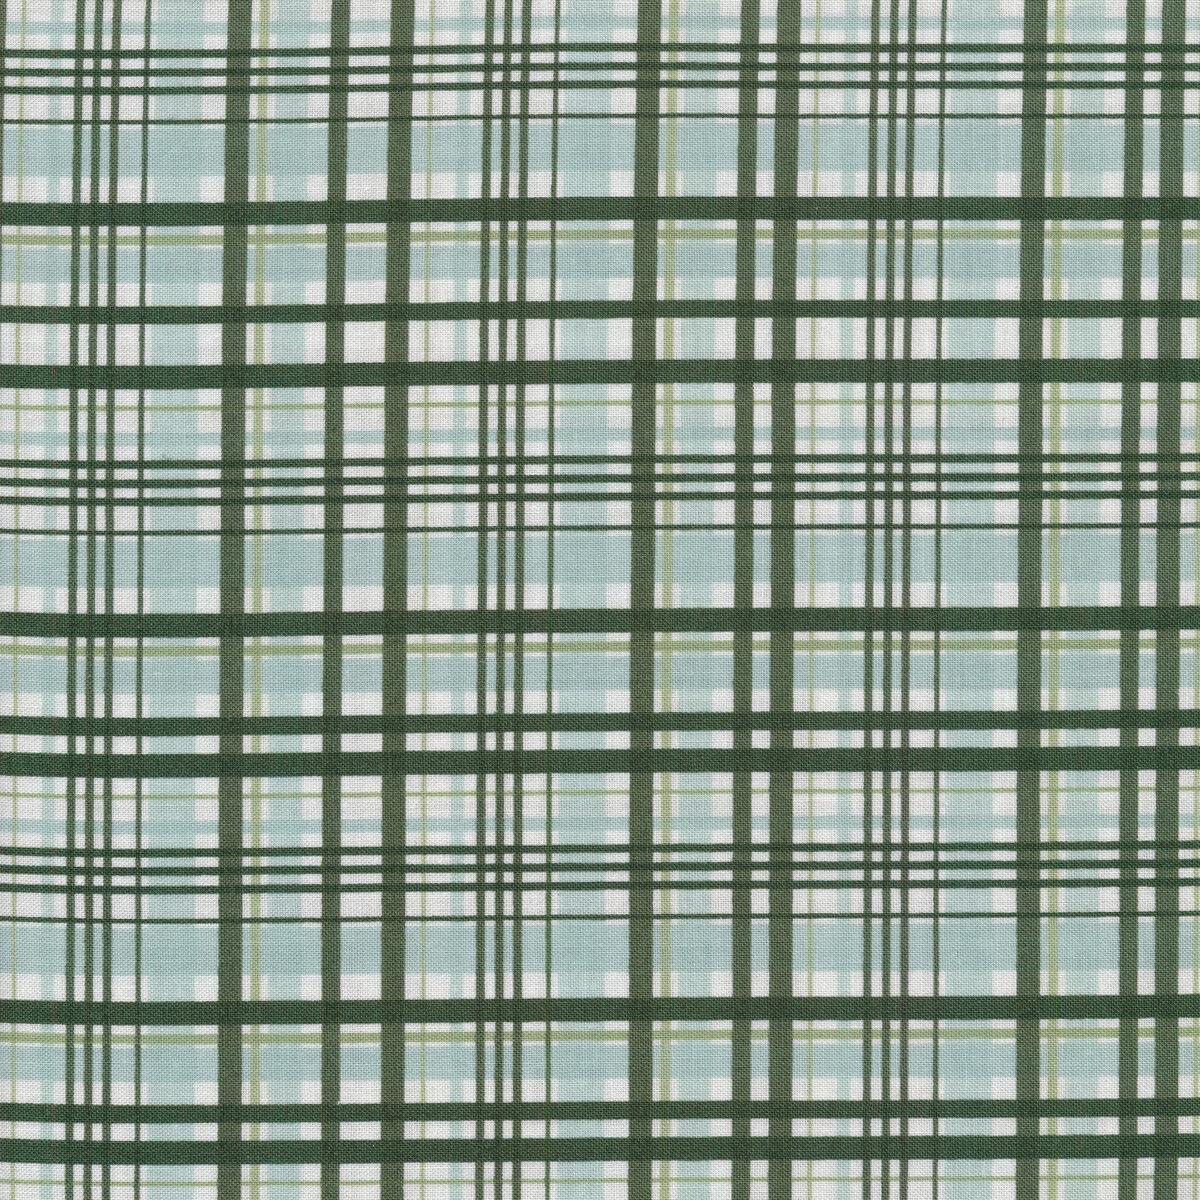 Its A Boy Panel Quilt - Free Pattern Download - Riley Blake